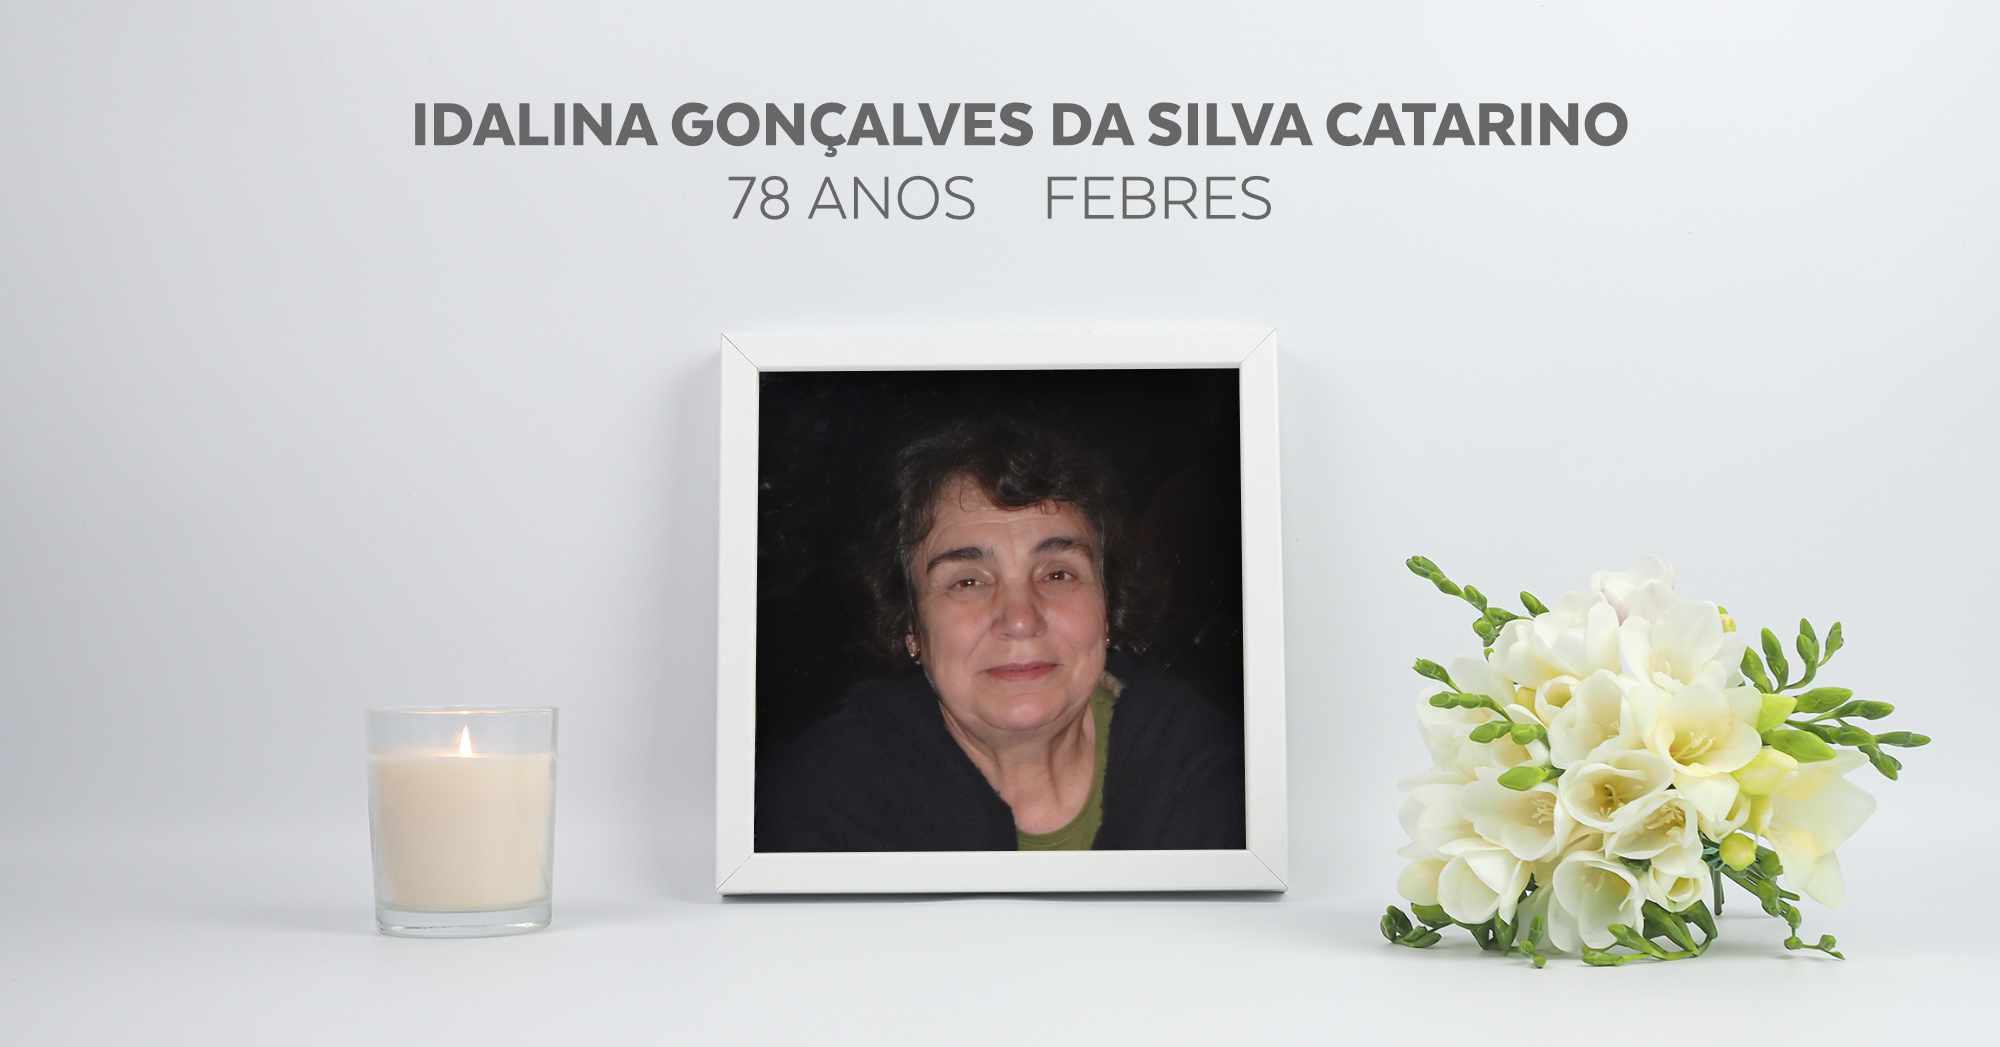 Idalina Gonçalves da Silva Catarino